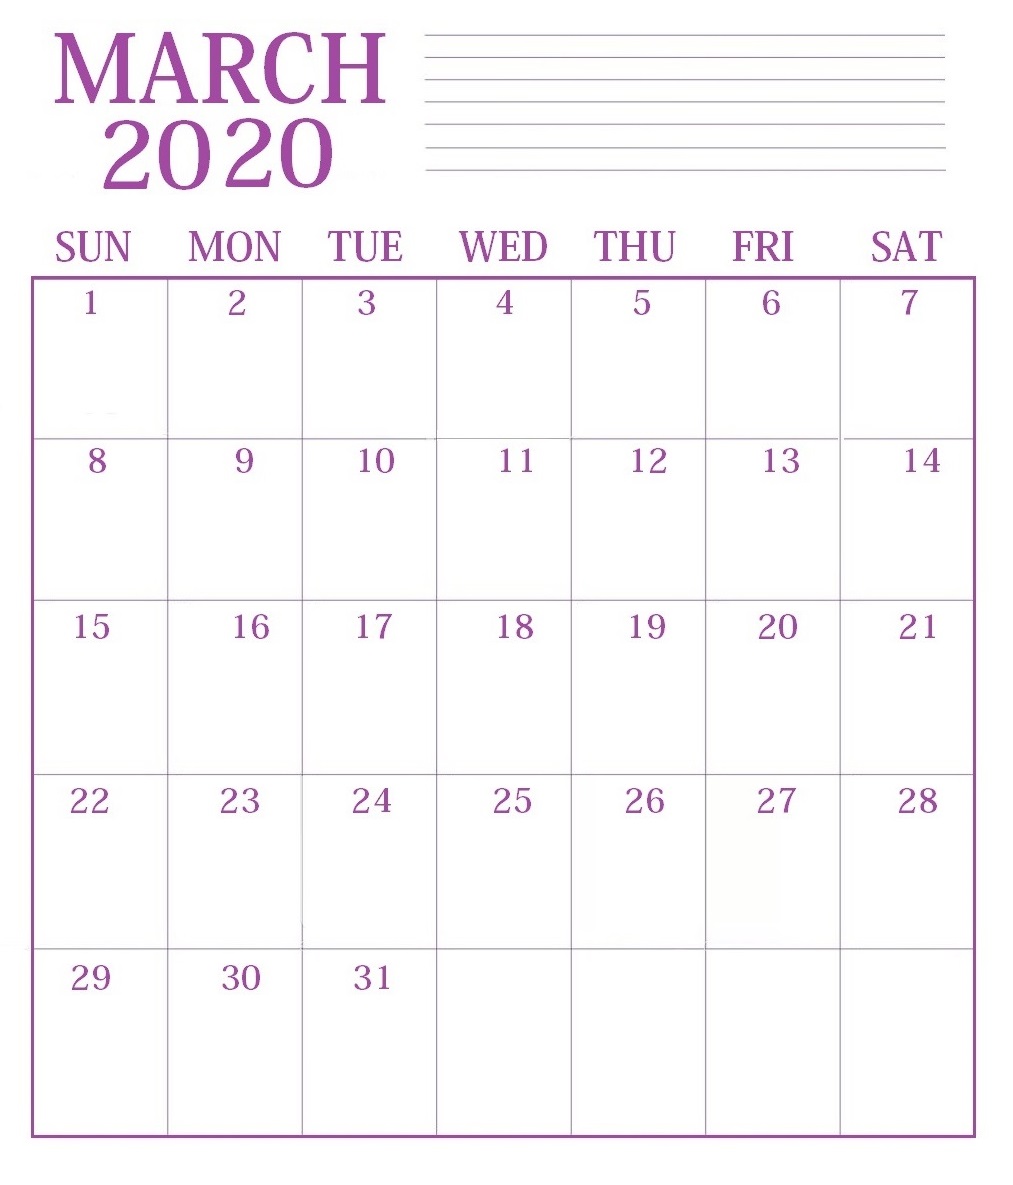 Print March 2020 Blank Calendar